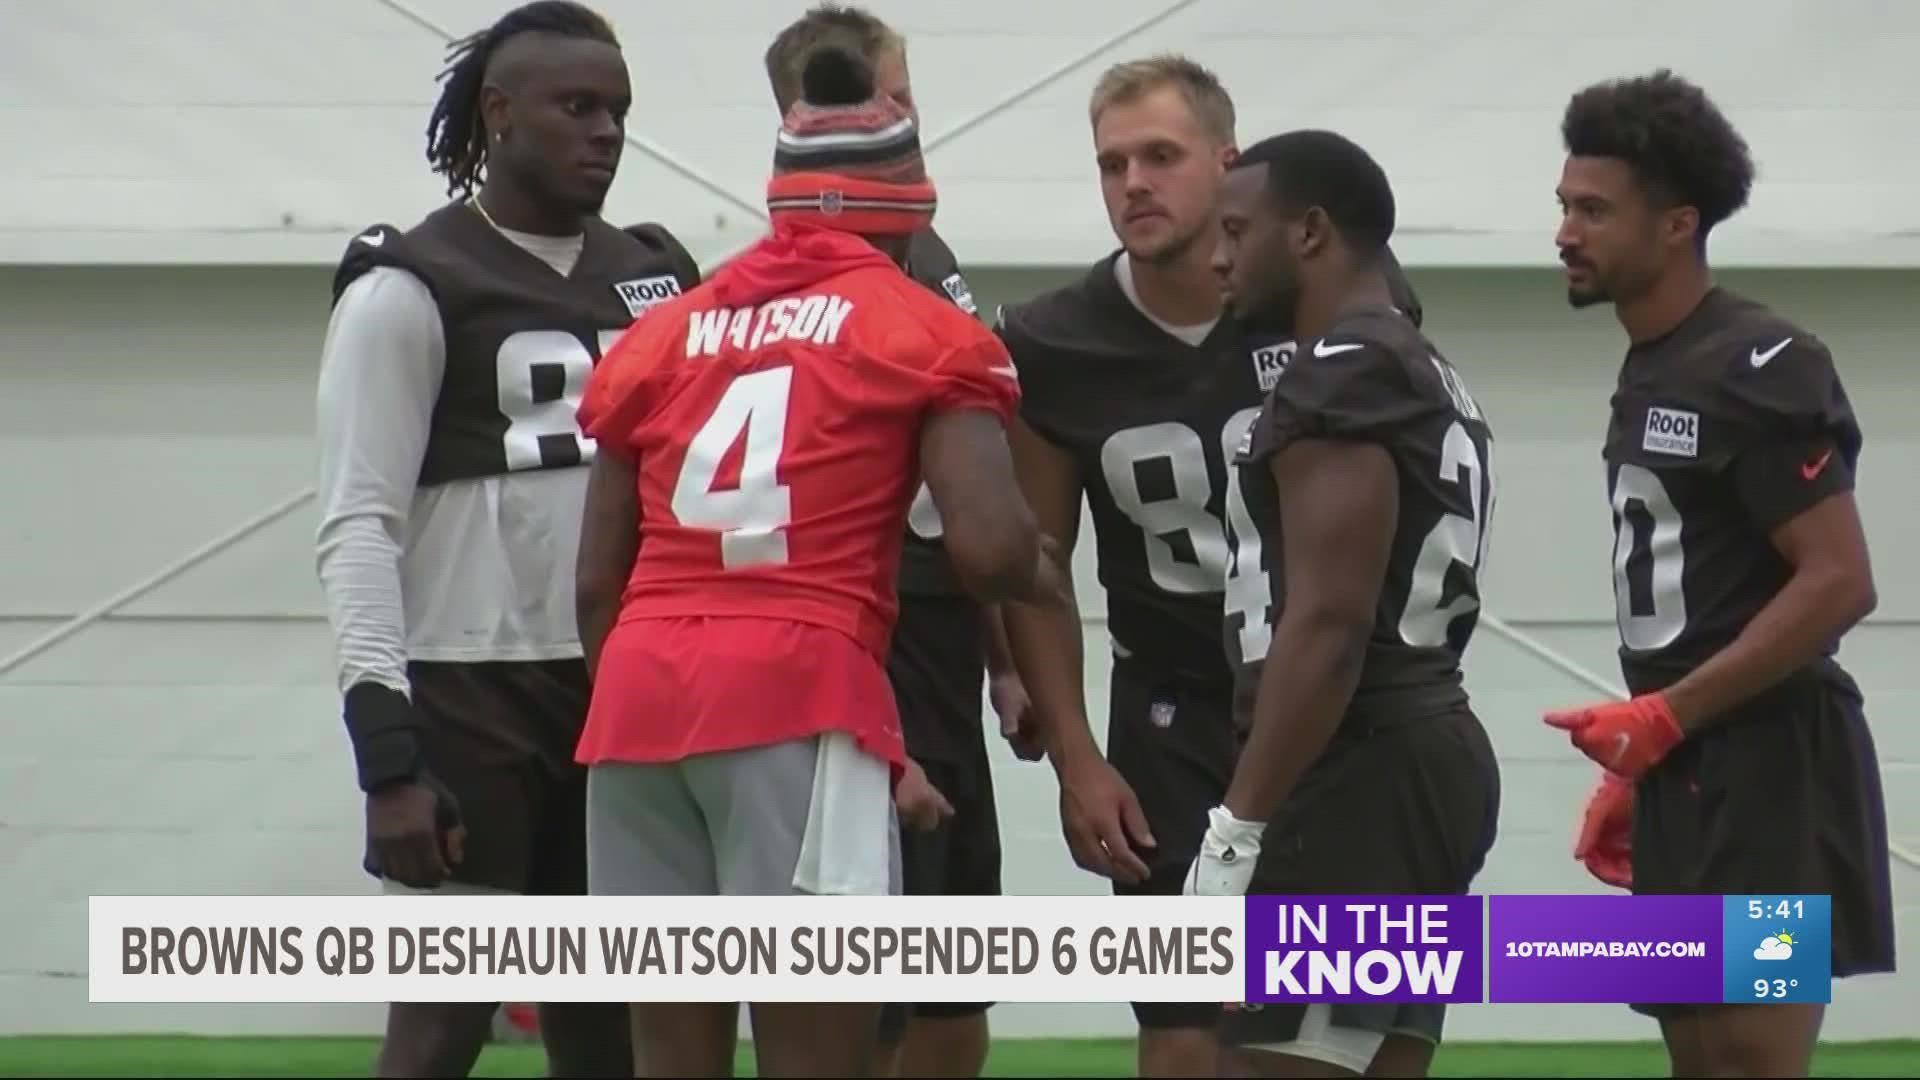 Former U.S. District Judge Sue L. Robinson has issued a suspension for Cleveland Browns quarterback Deshaun Watson.